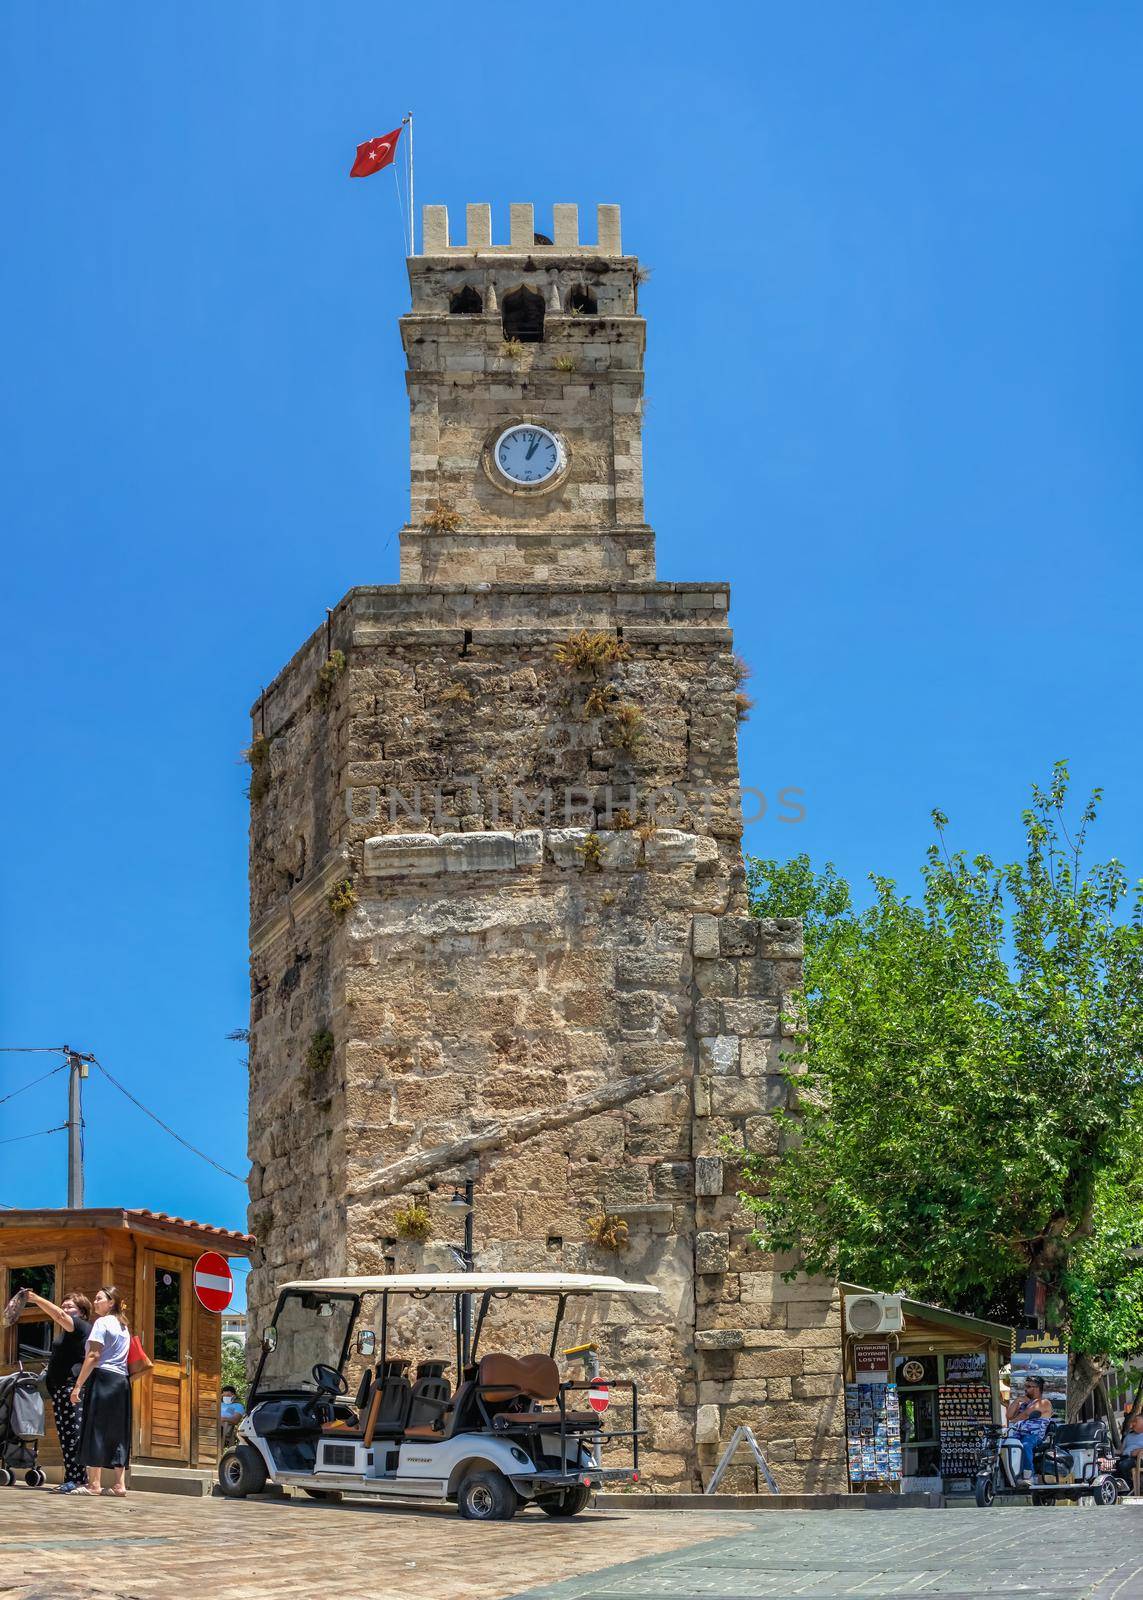 Antalya Clock Tower in Turkey by Multipedia